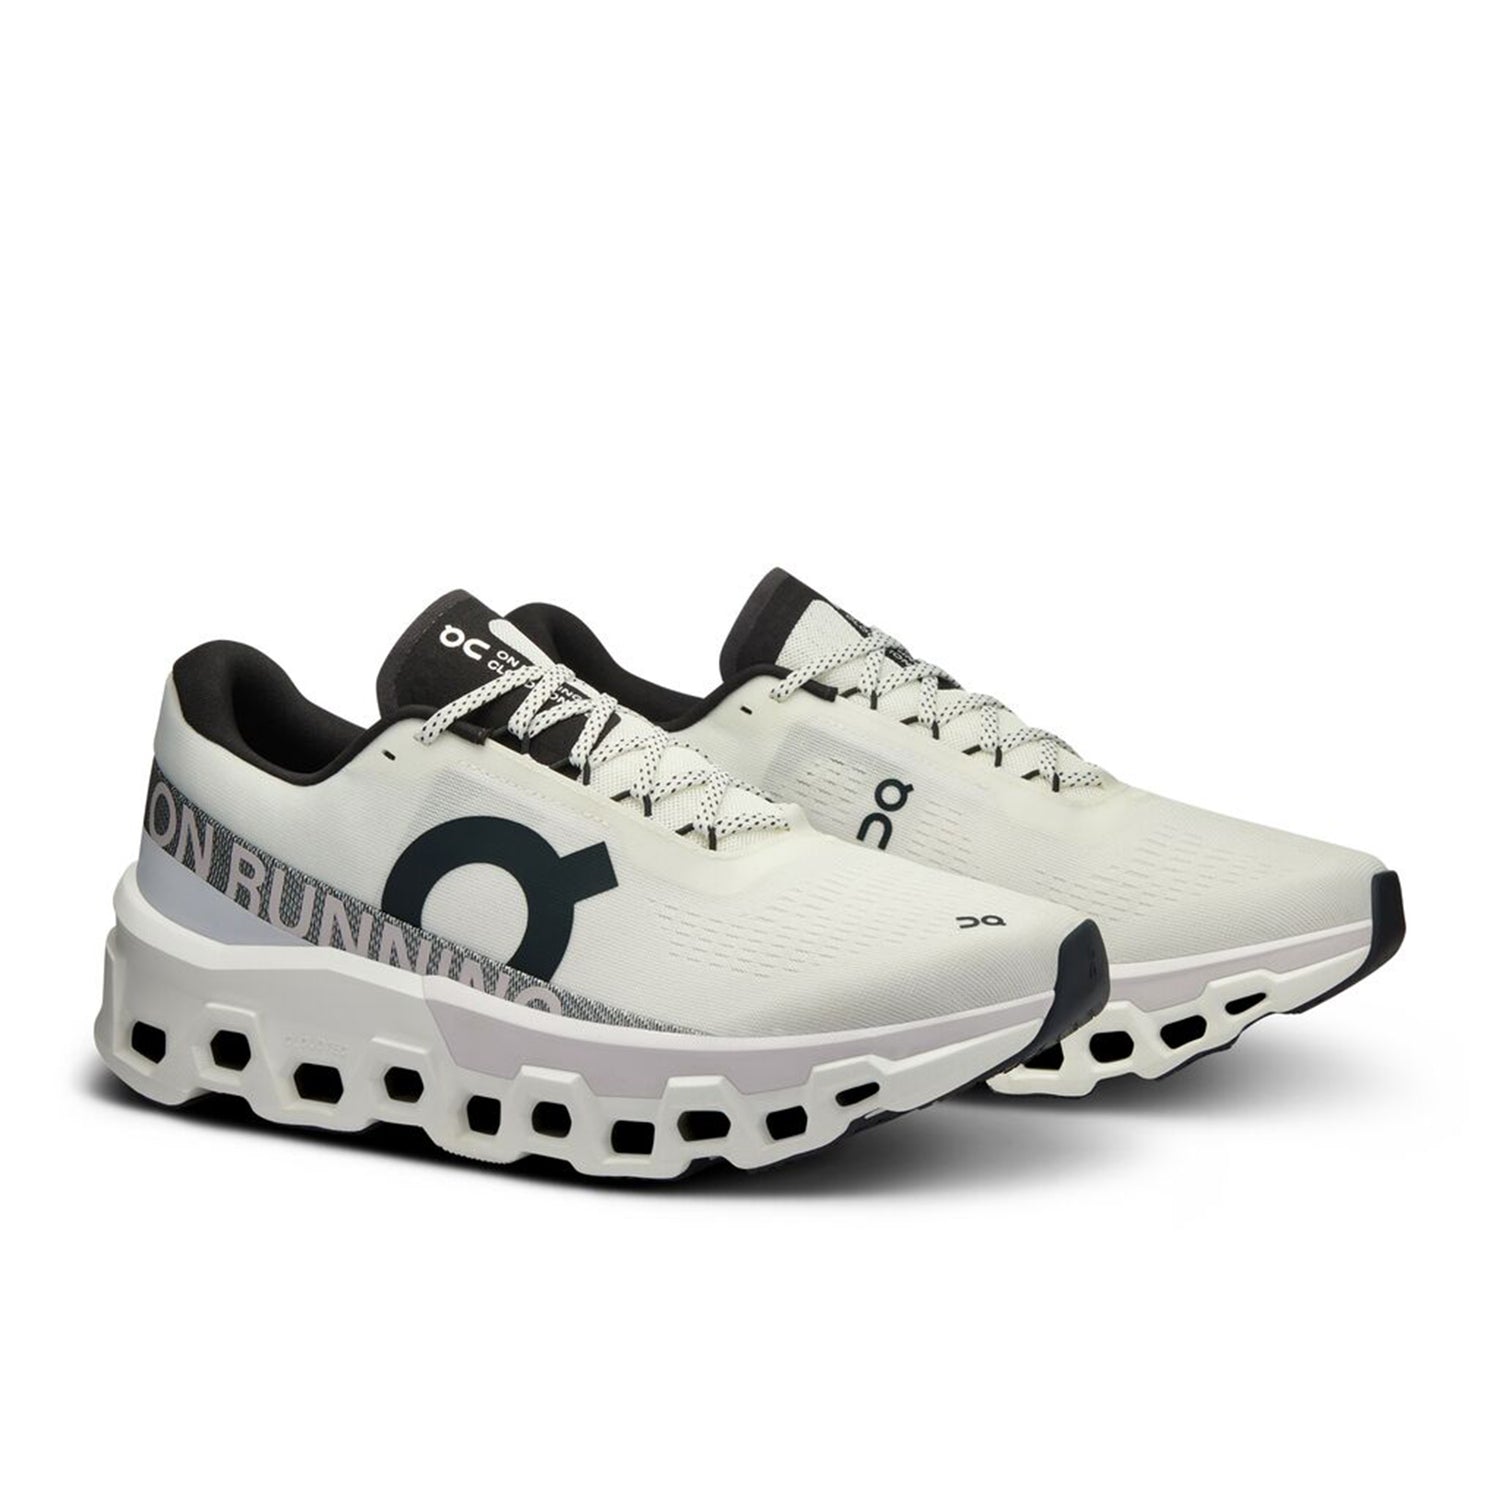 On women's Cloudmonster running shoe